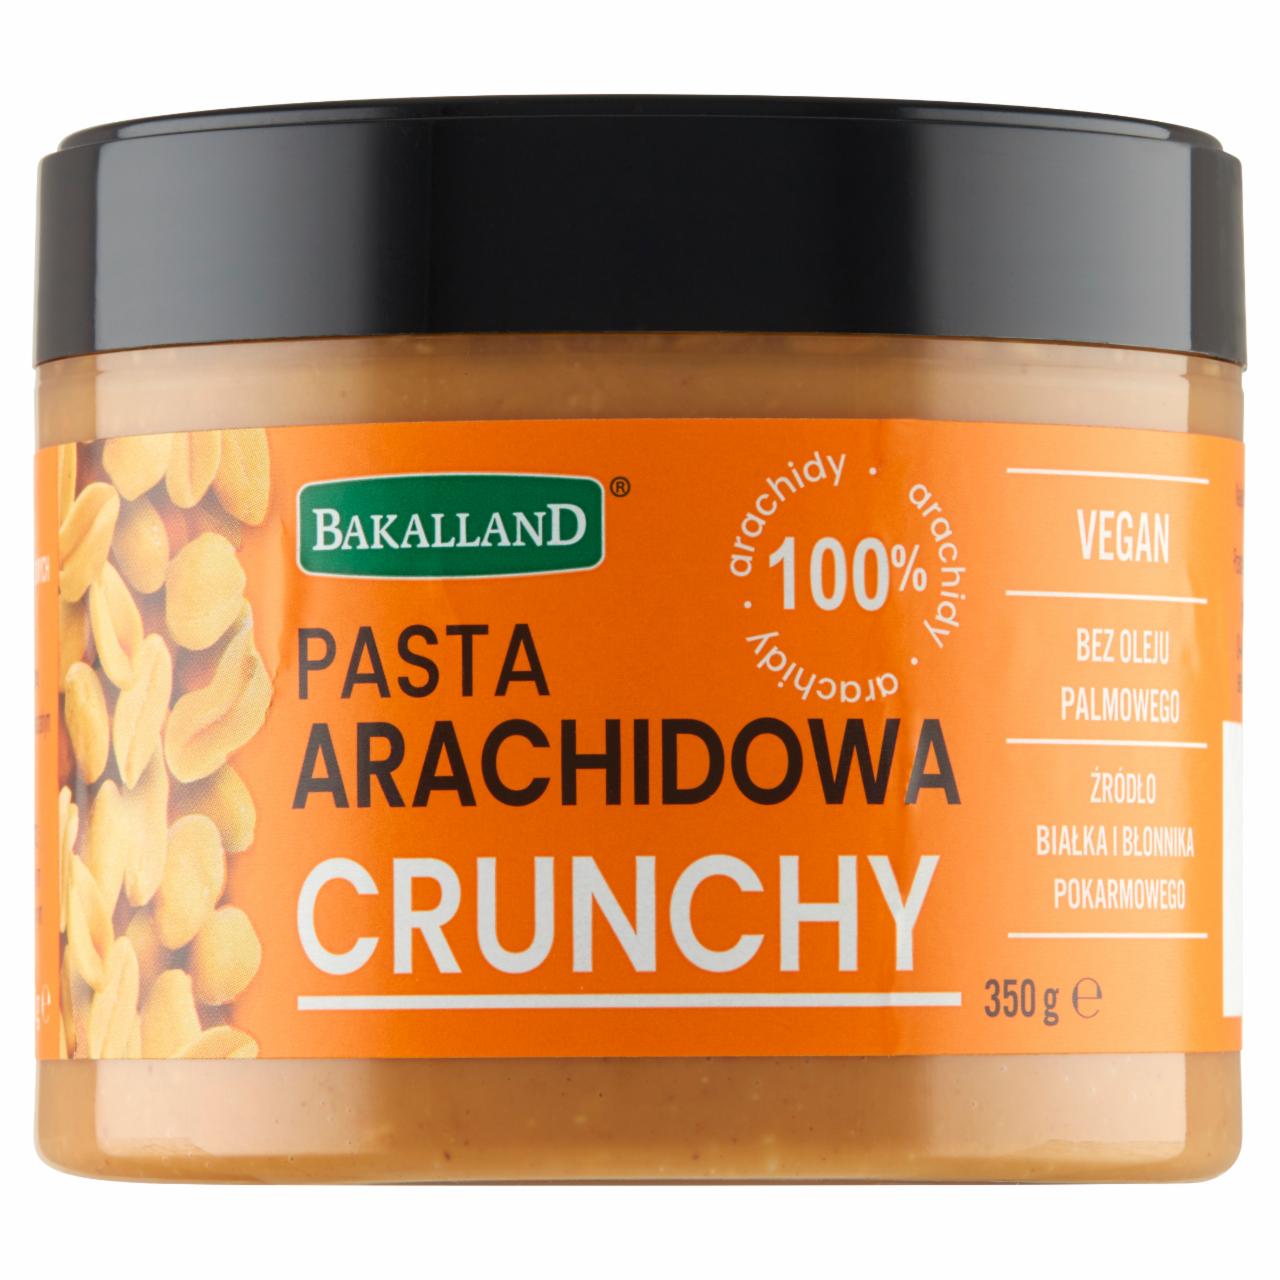 Zdjęcia - Bakalland Pasta arachidowa crunchy 350 g